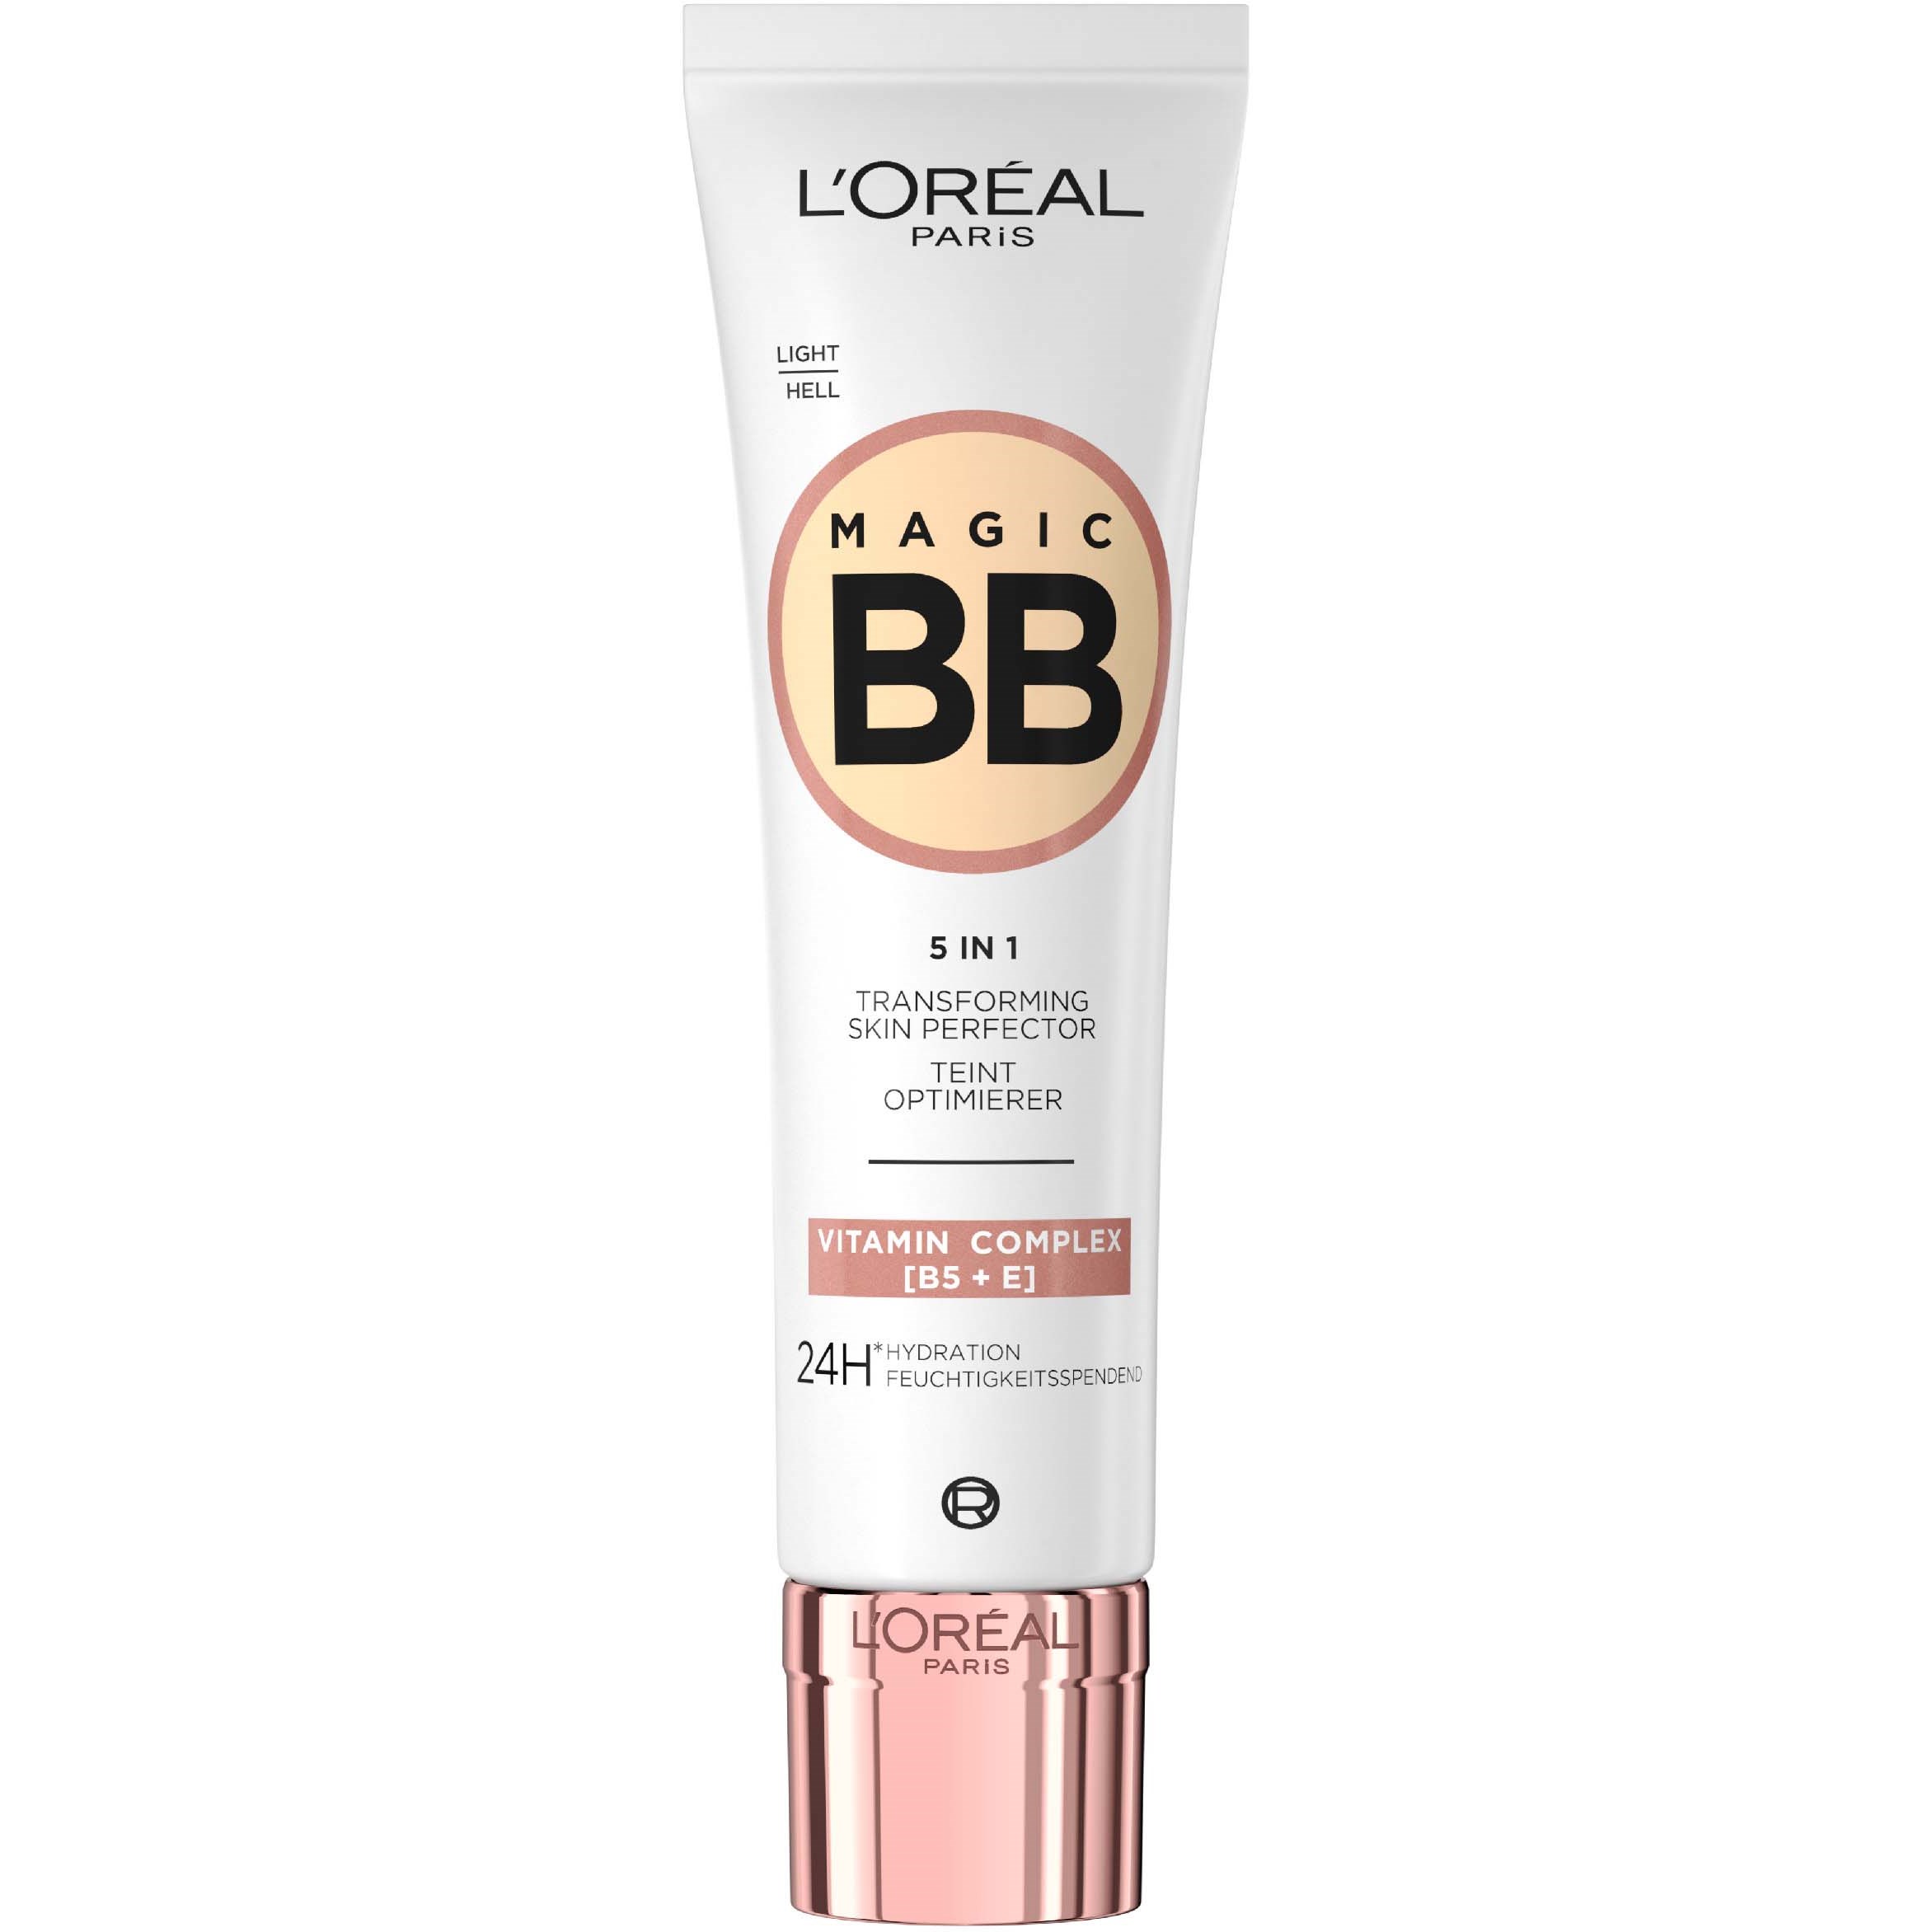 Zdjęcia - Kremy i toniki LOreal L'Oréal Paris Magic BB Cream, Transforming Skin Perfector 2 Light 